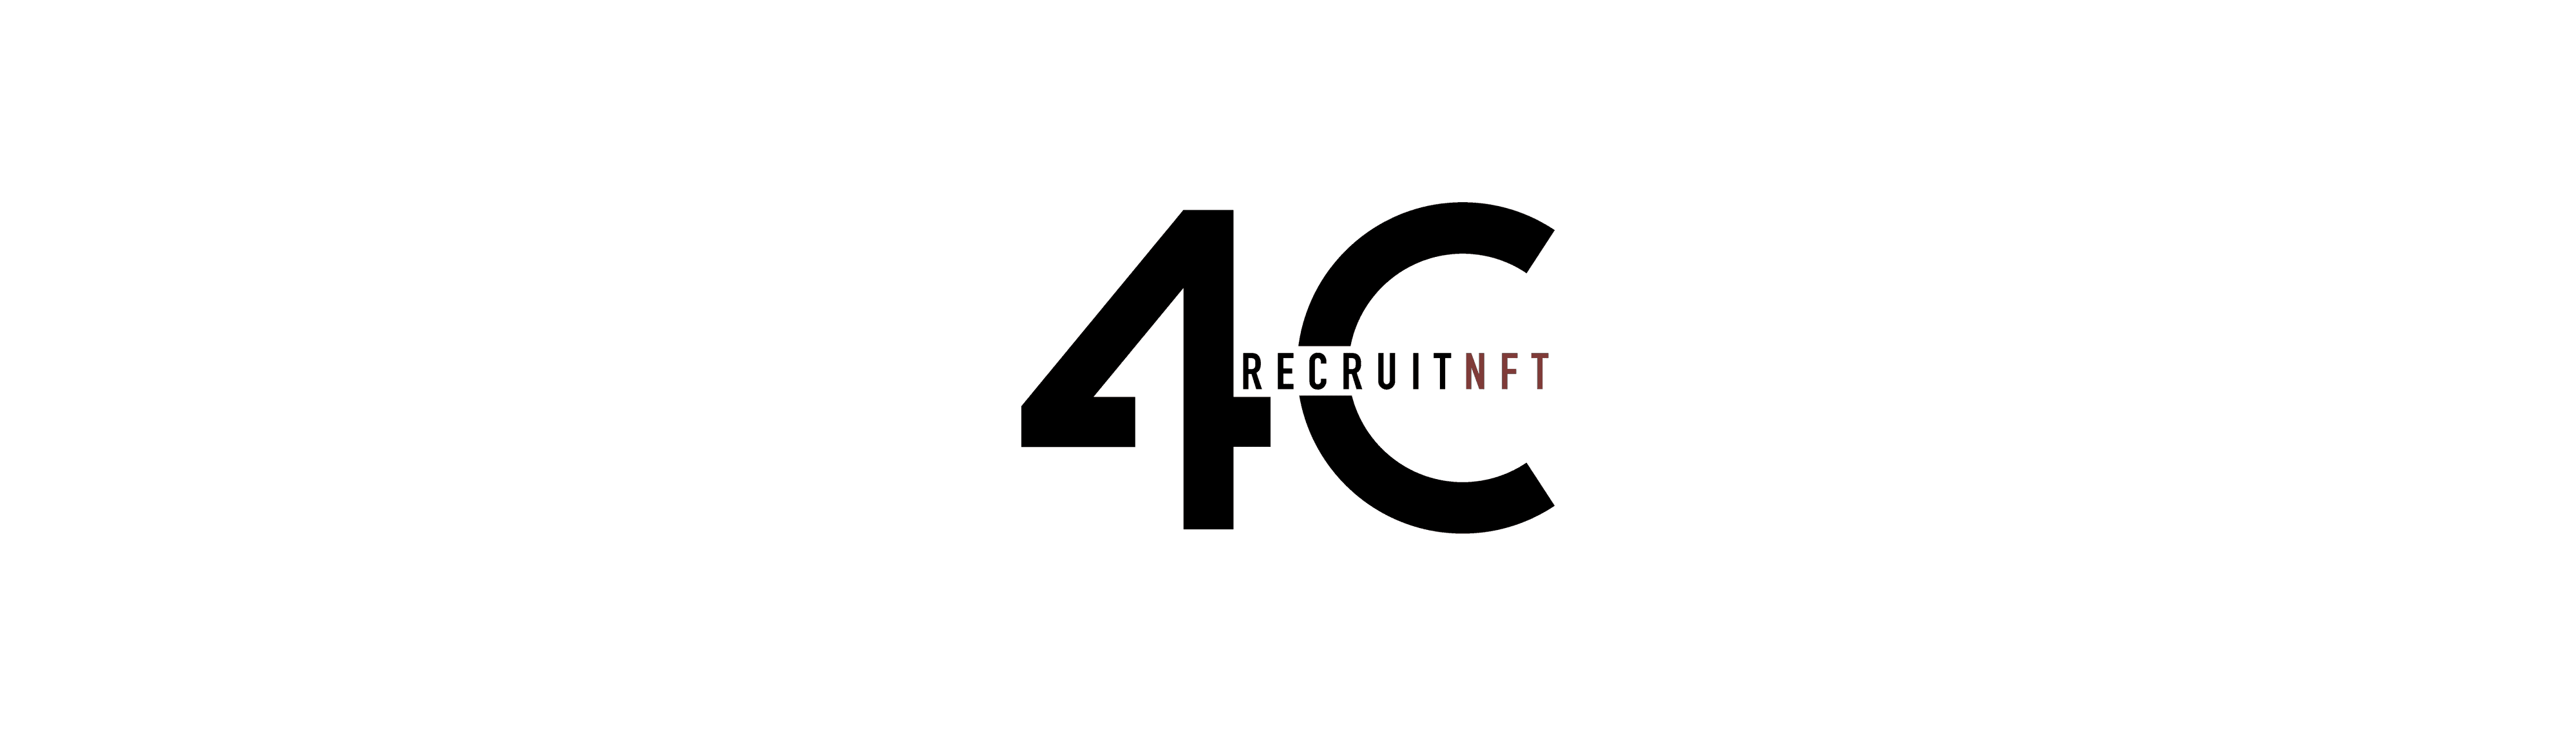 4crecruiting banner